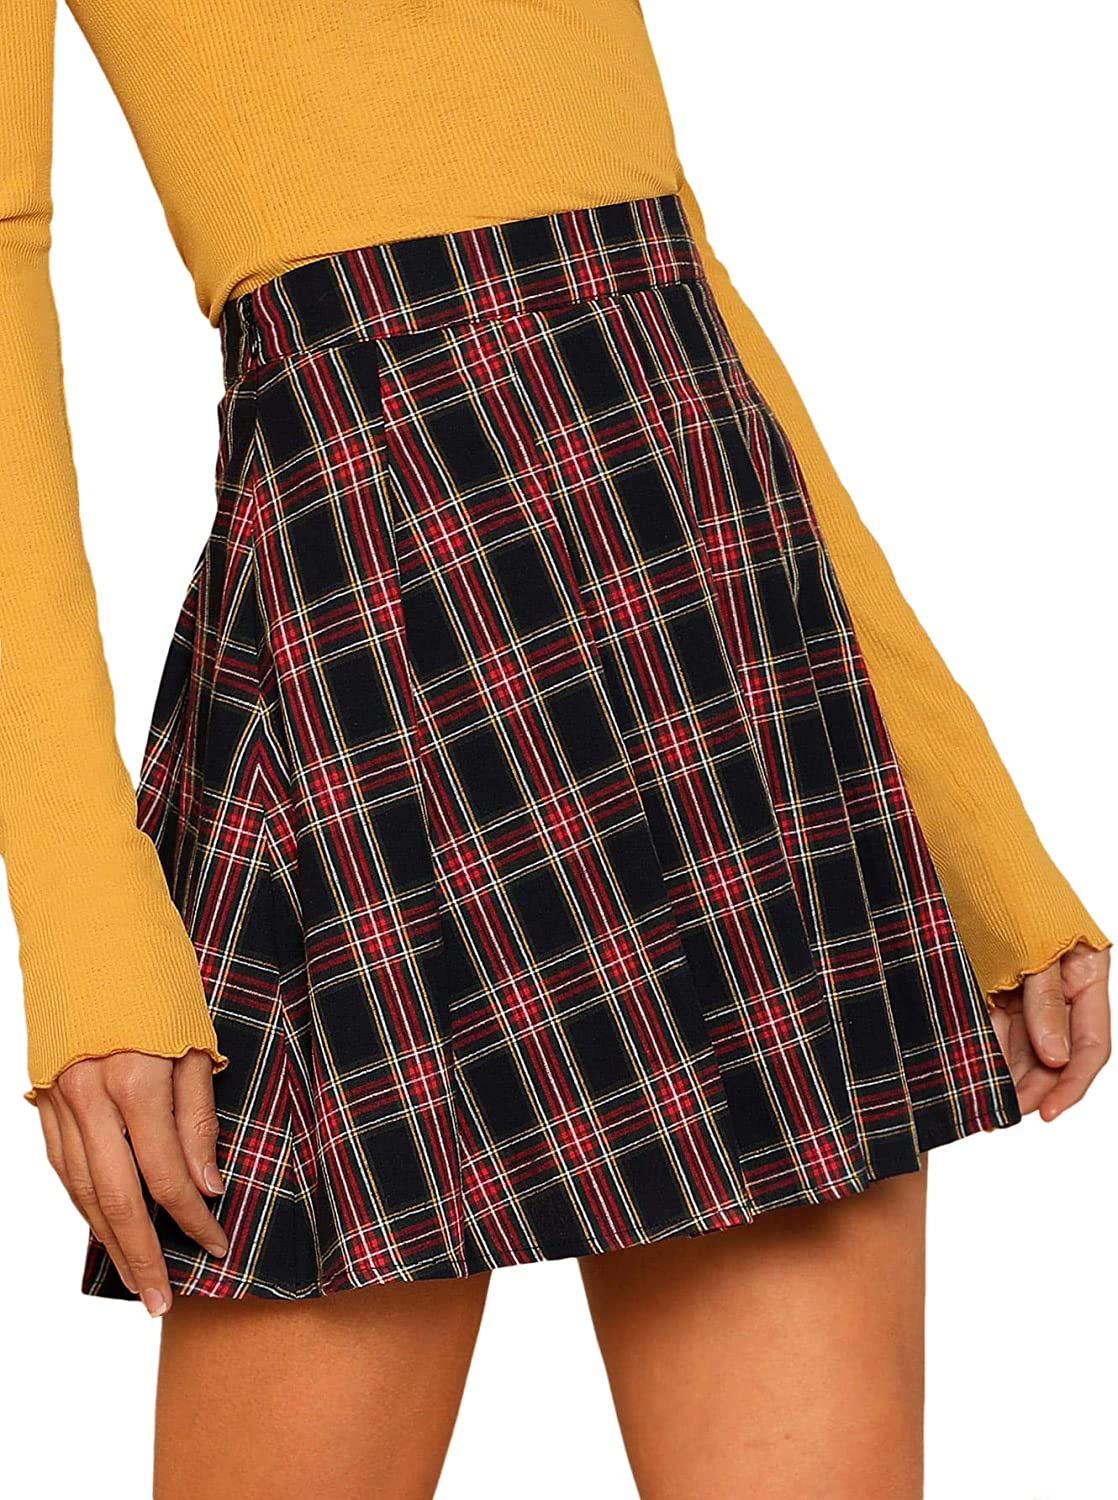 WDIRARA Womens Casual Plaid High Waist Pleated A-Line Mini Skirt 